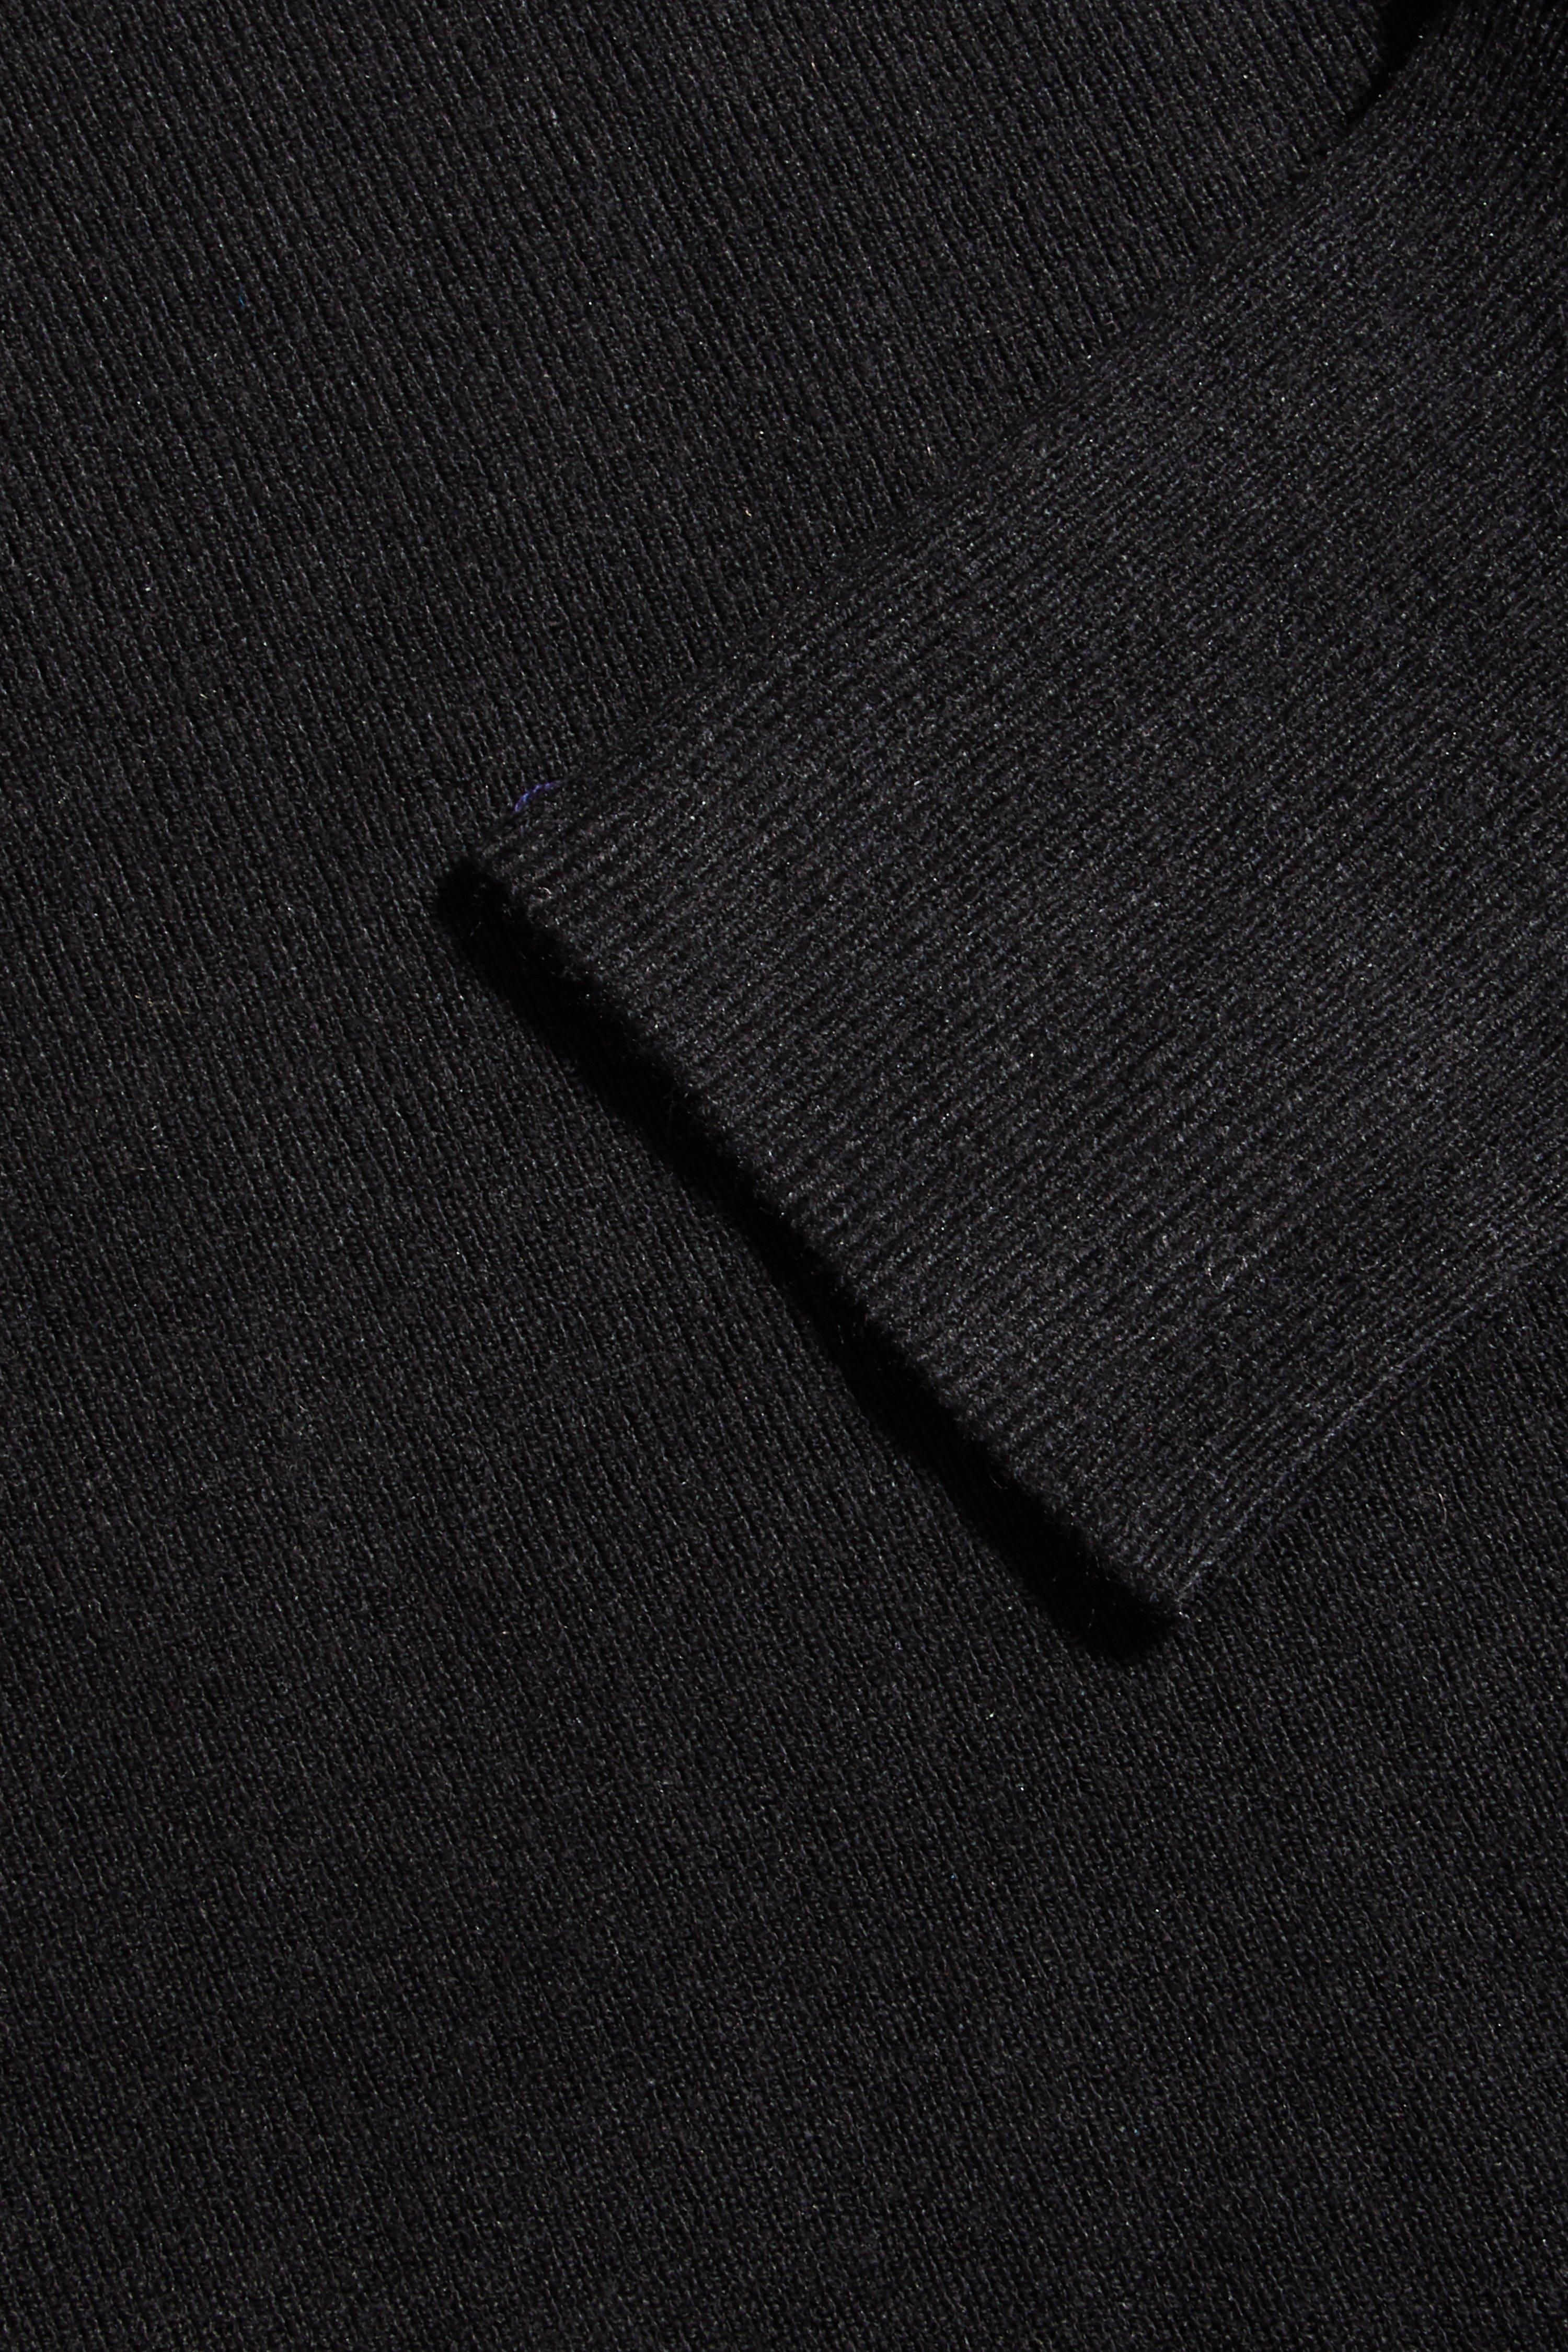 - Knitted jumper  - Fringe sleeve  - High neck  - Mesh detail  - Length: 65cm approx